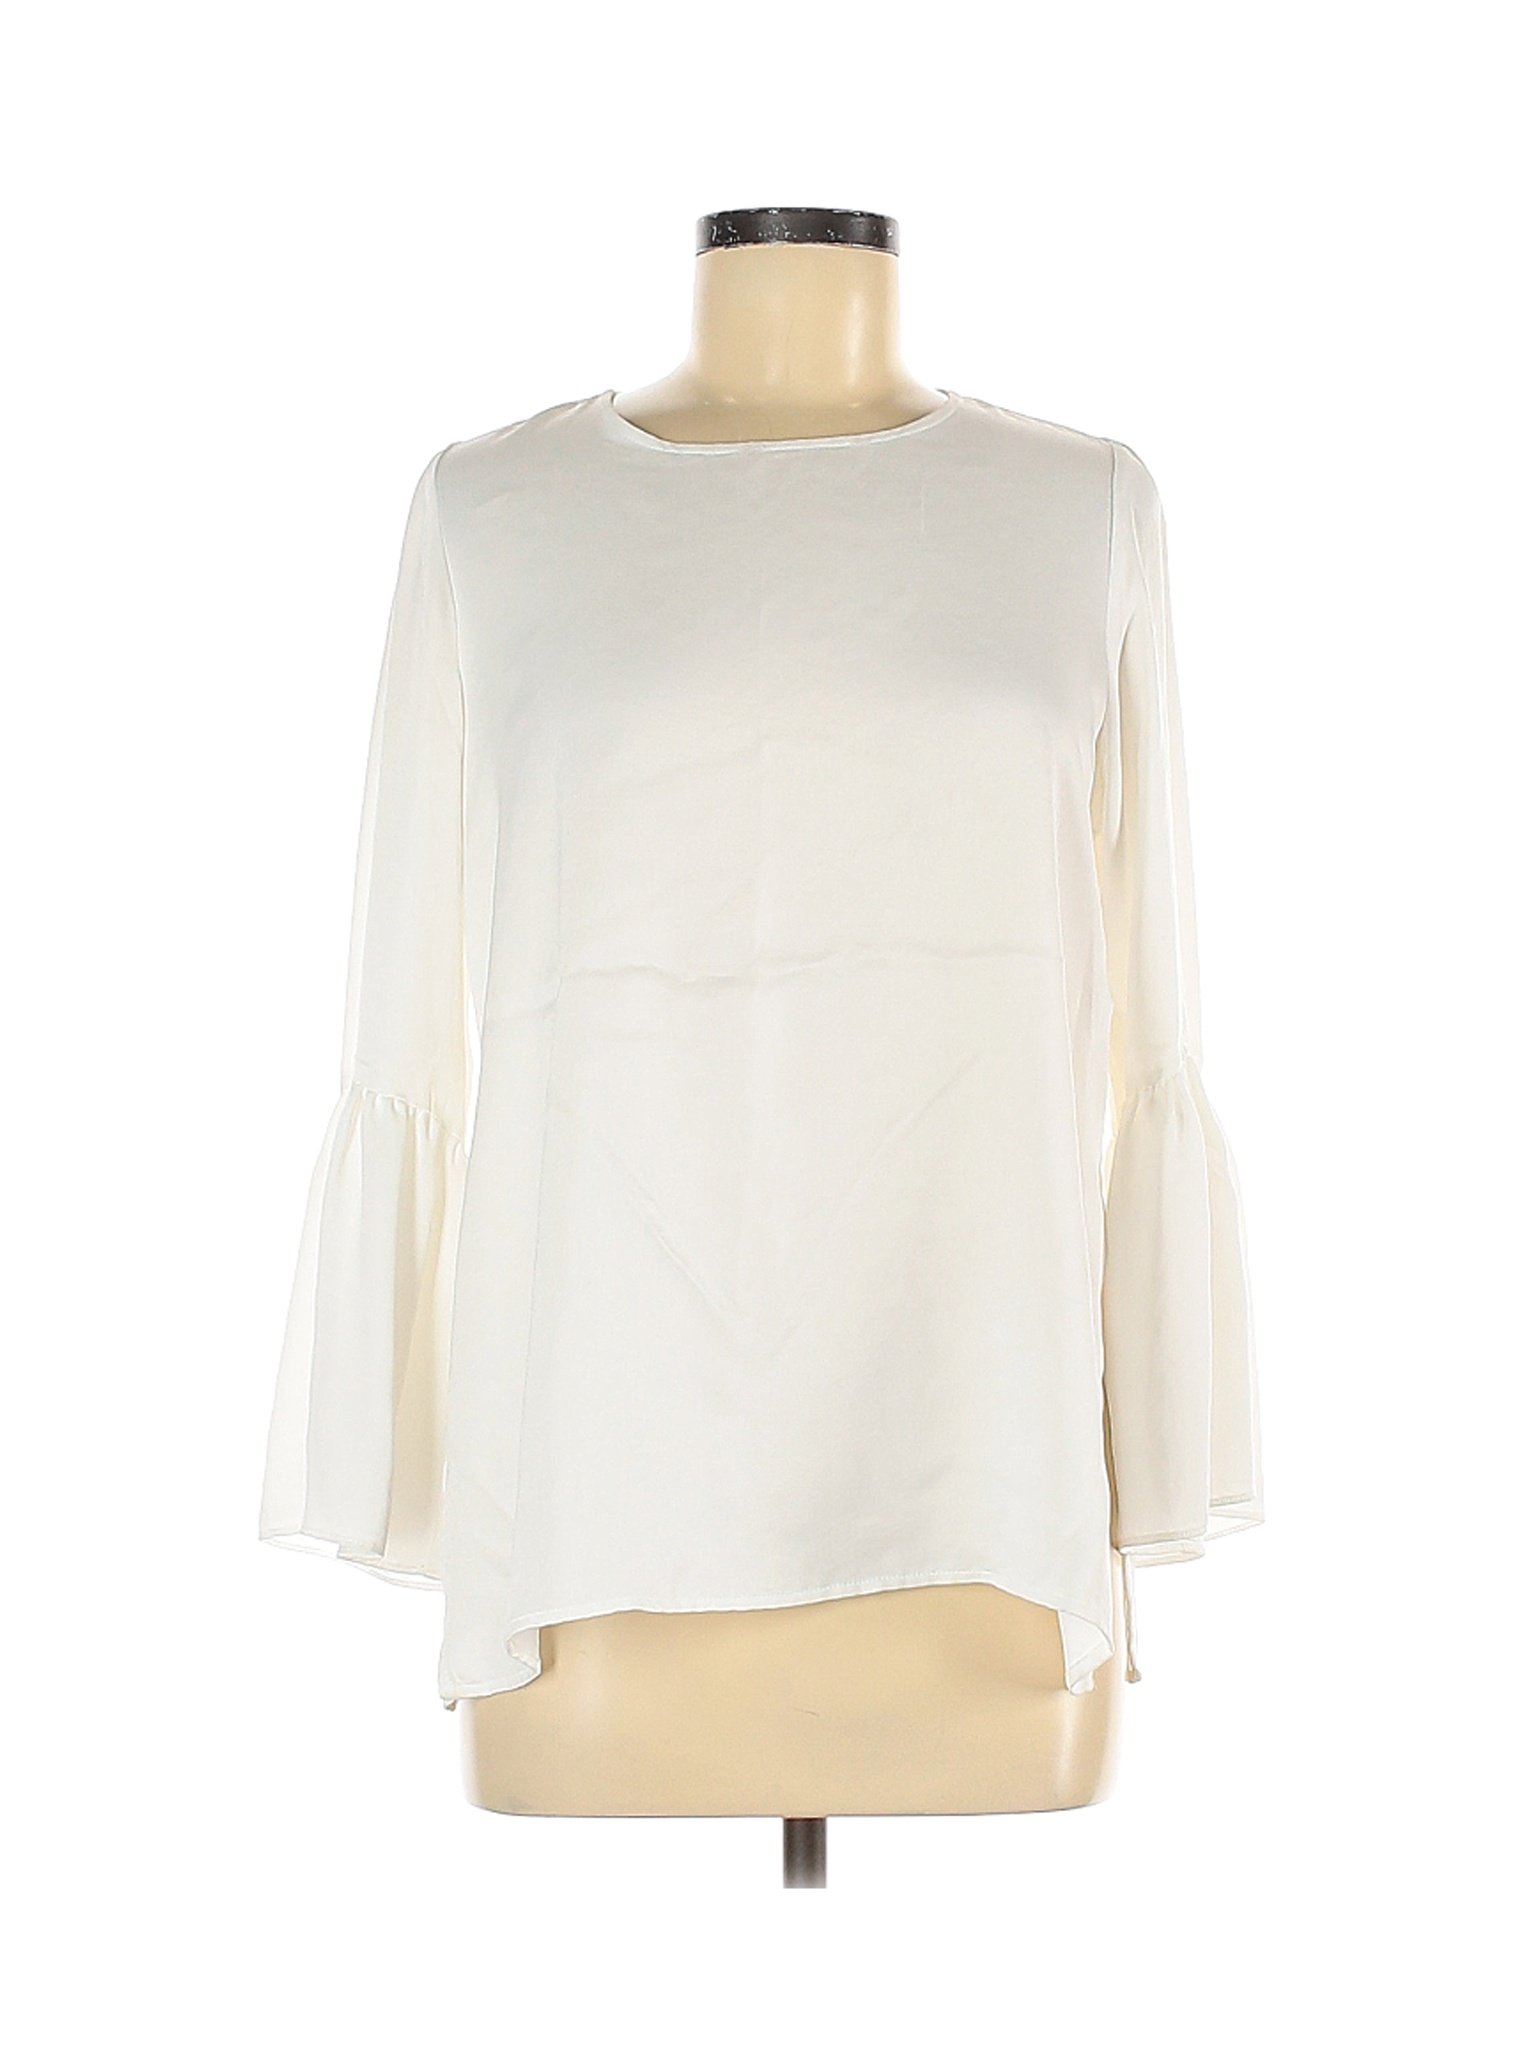 Zara Basic Women White 3/4 Sleeve Blouse M | eBay